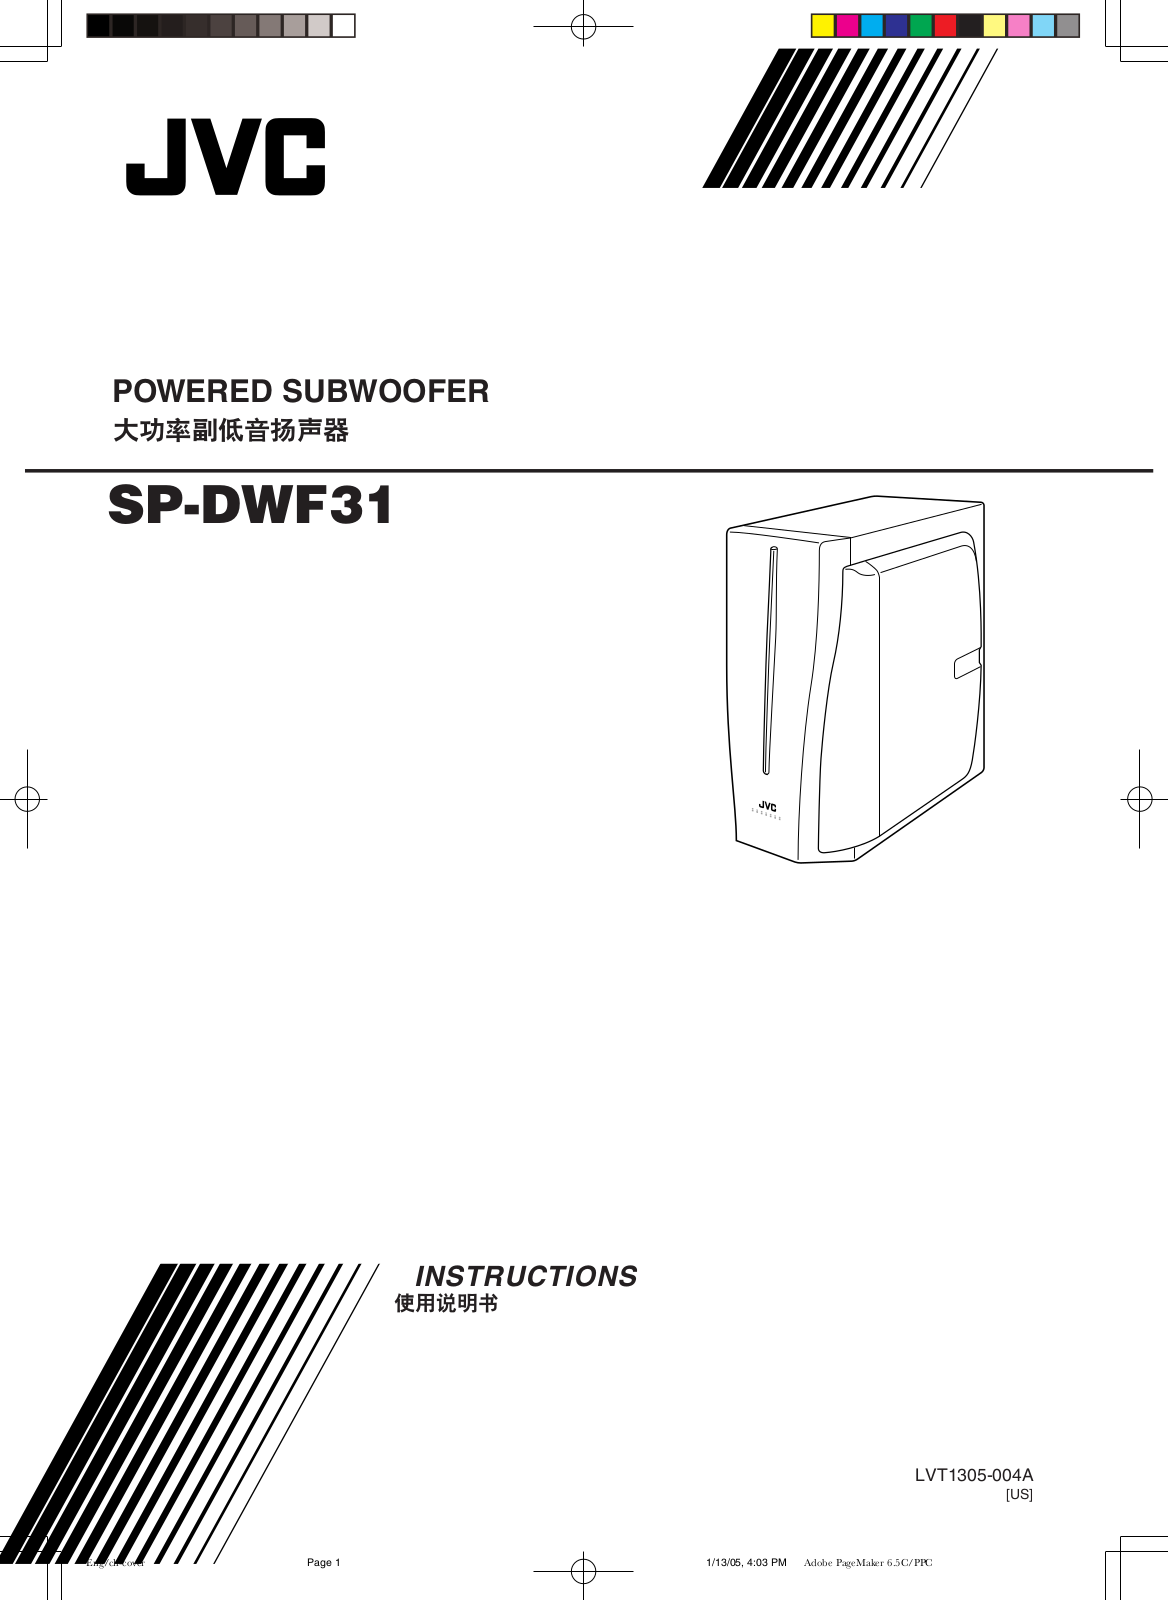 JVC SP-DWF31 User Manual